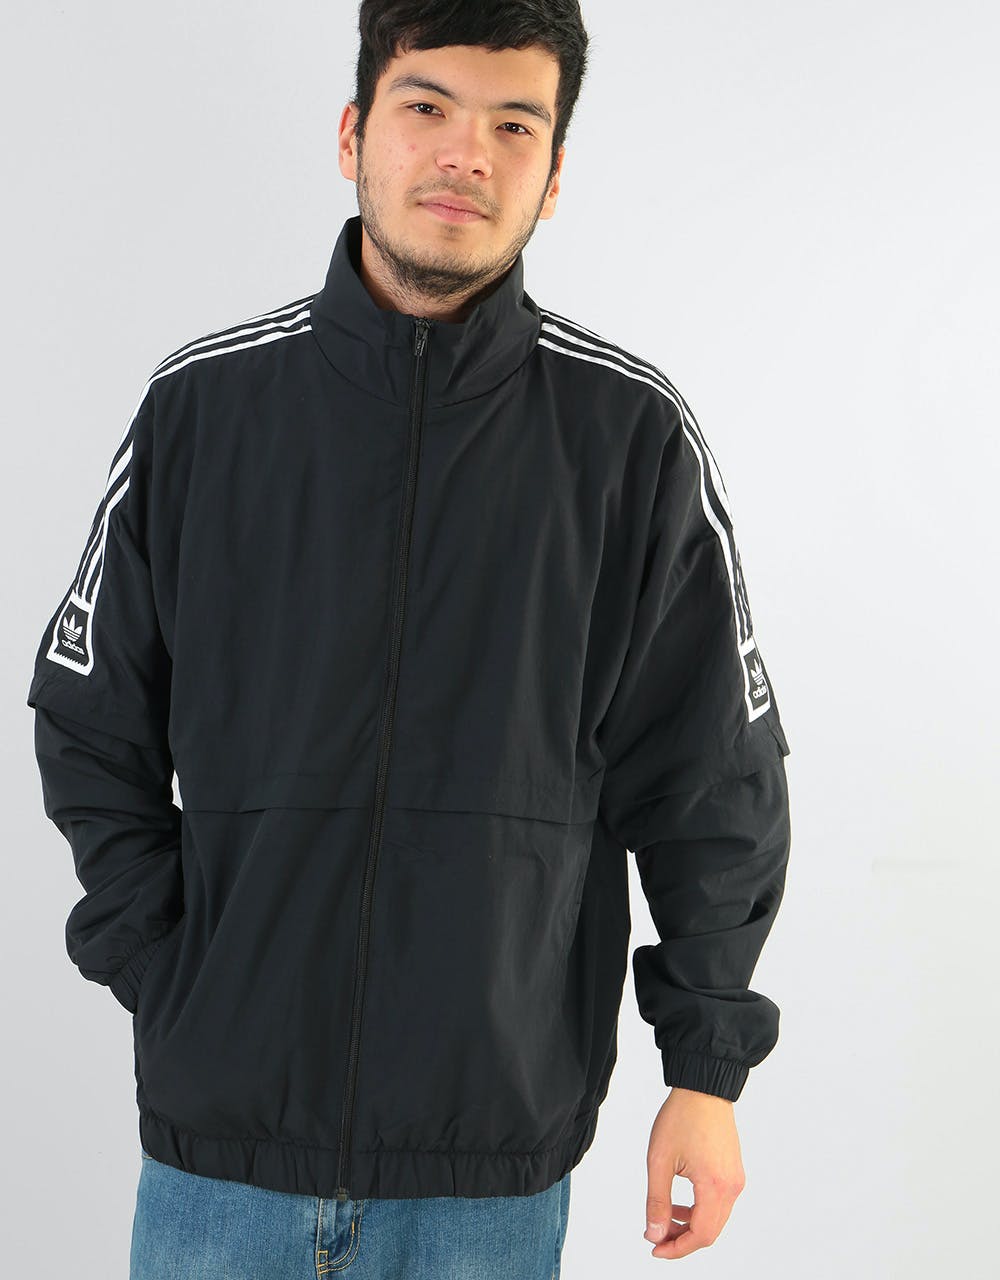 Adidas Standard 20 Jacket - Black/White